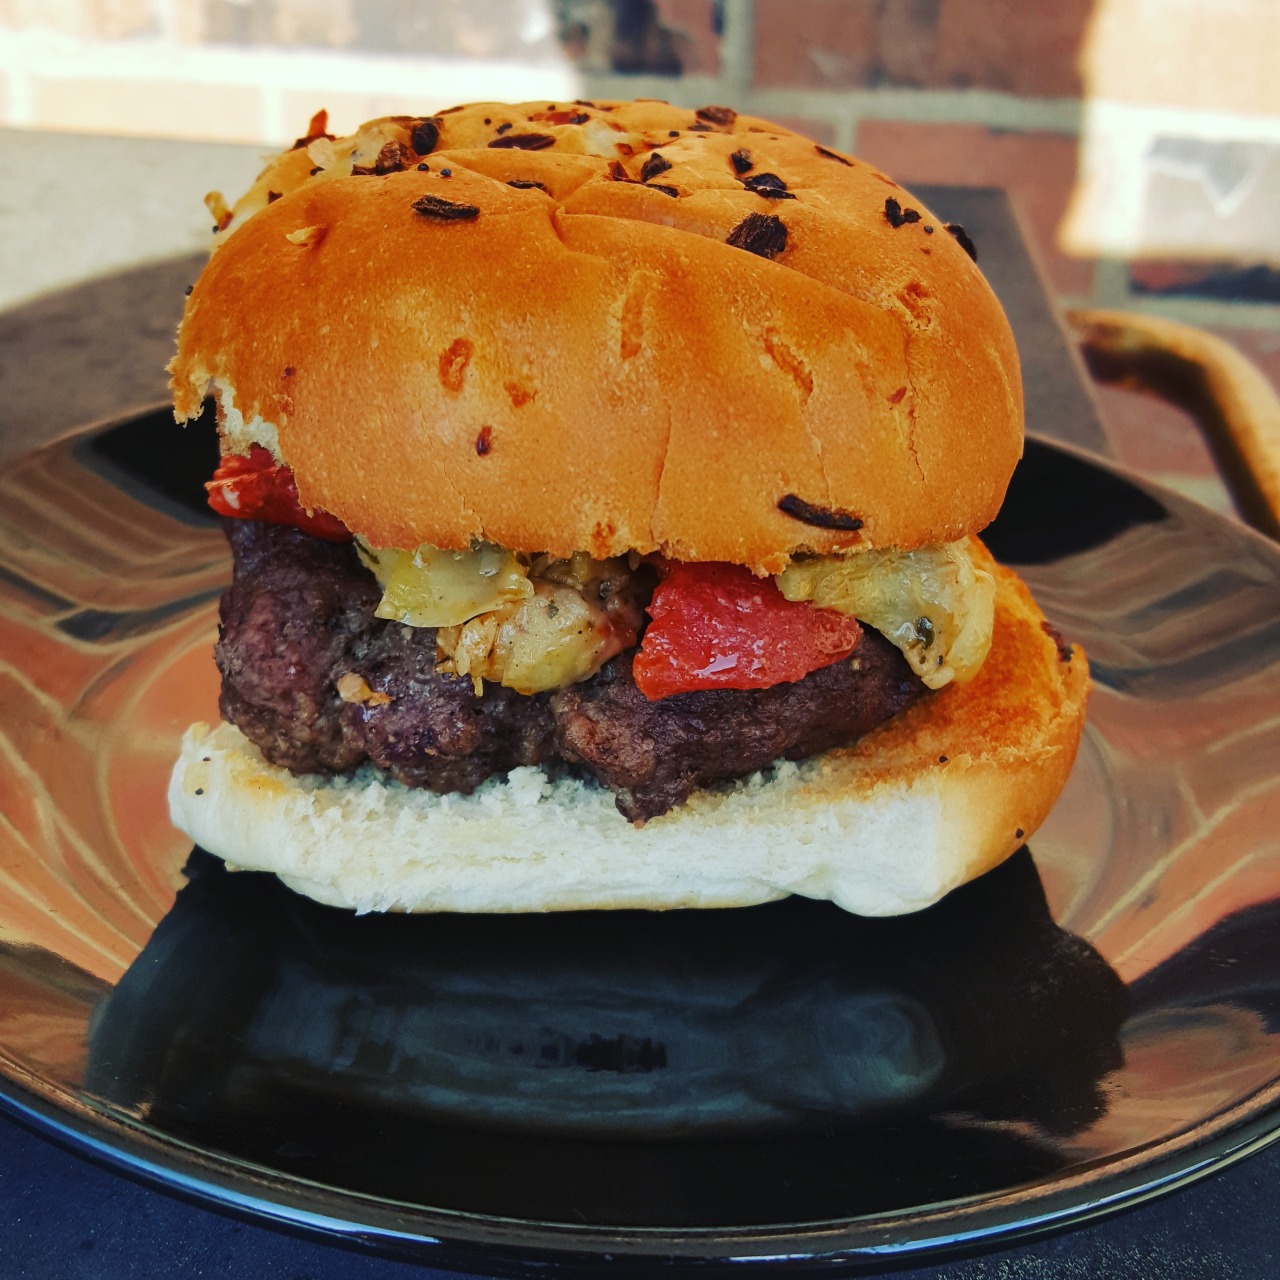 The delicious “I Heartichoke You” burger!